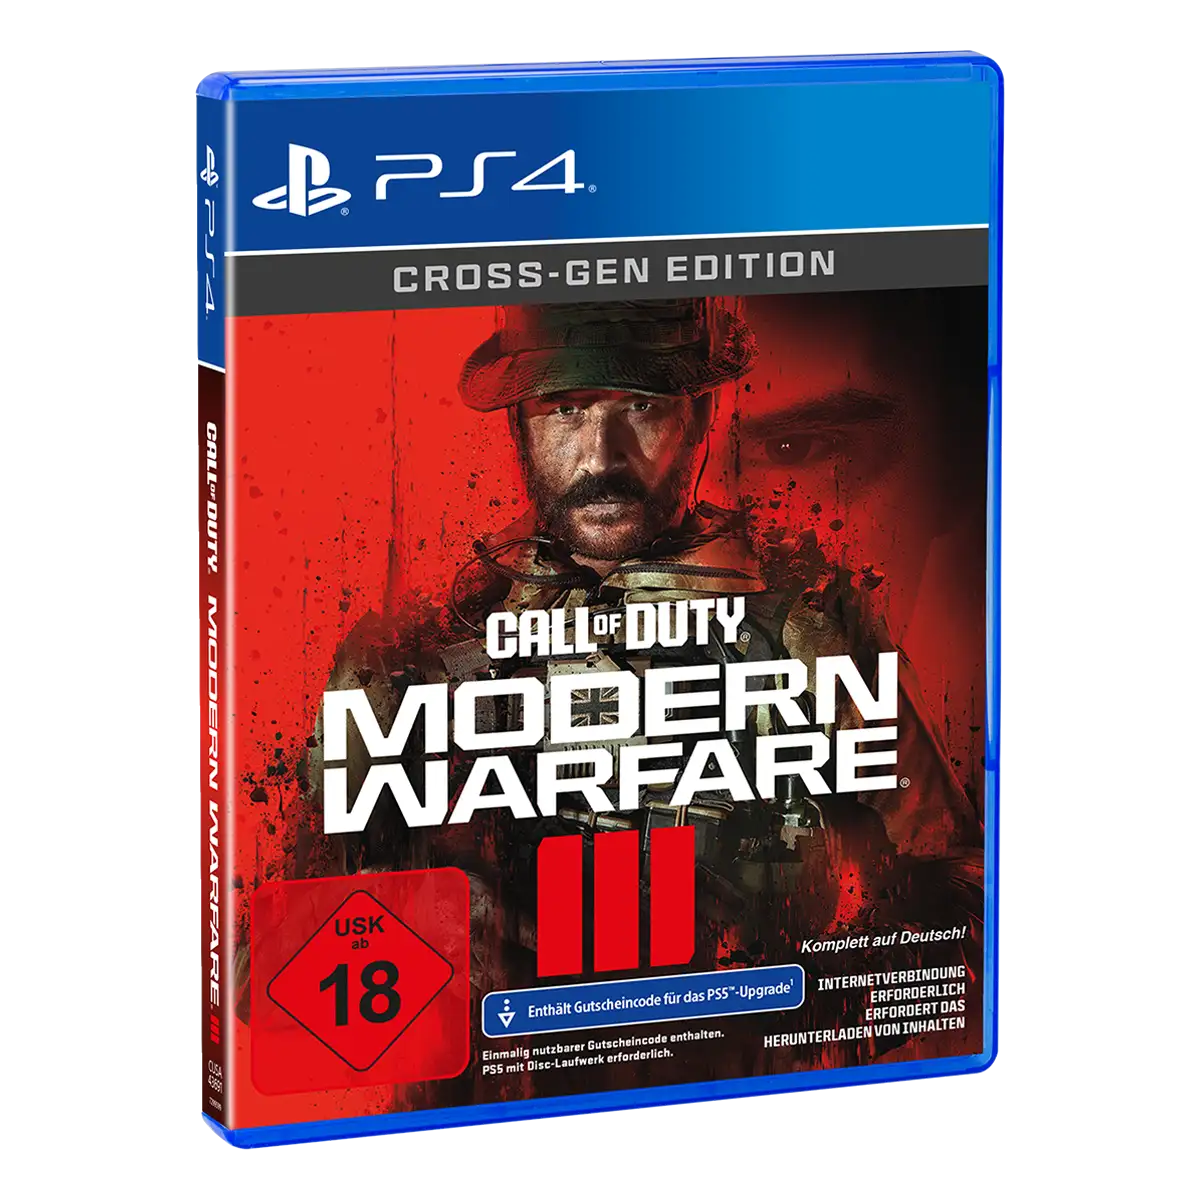 Call of Duty: Modern Warfare III (PS4) Image 2